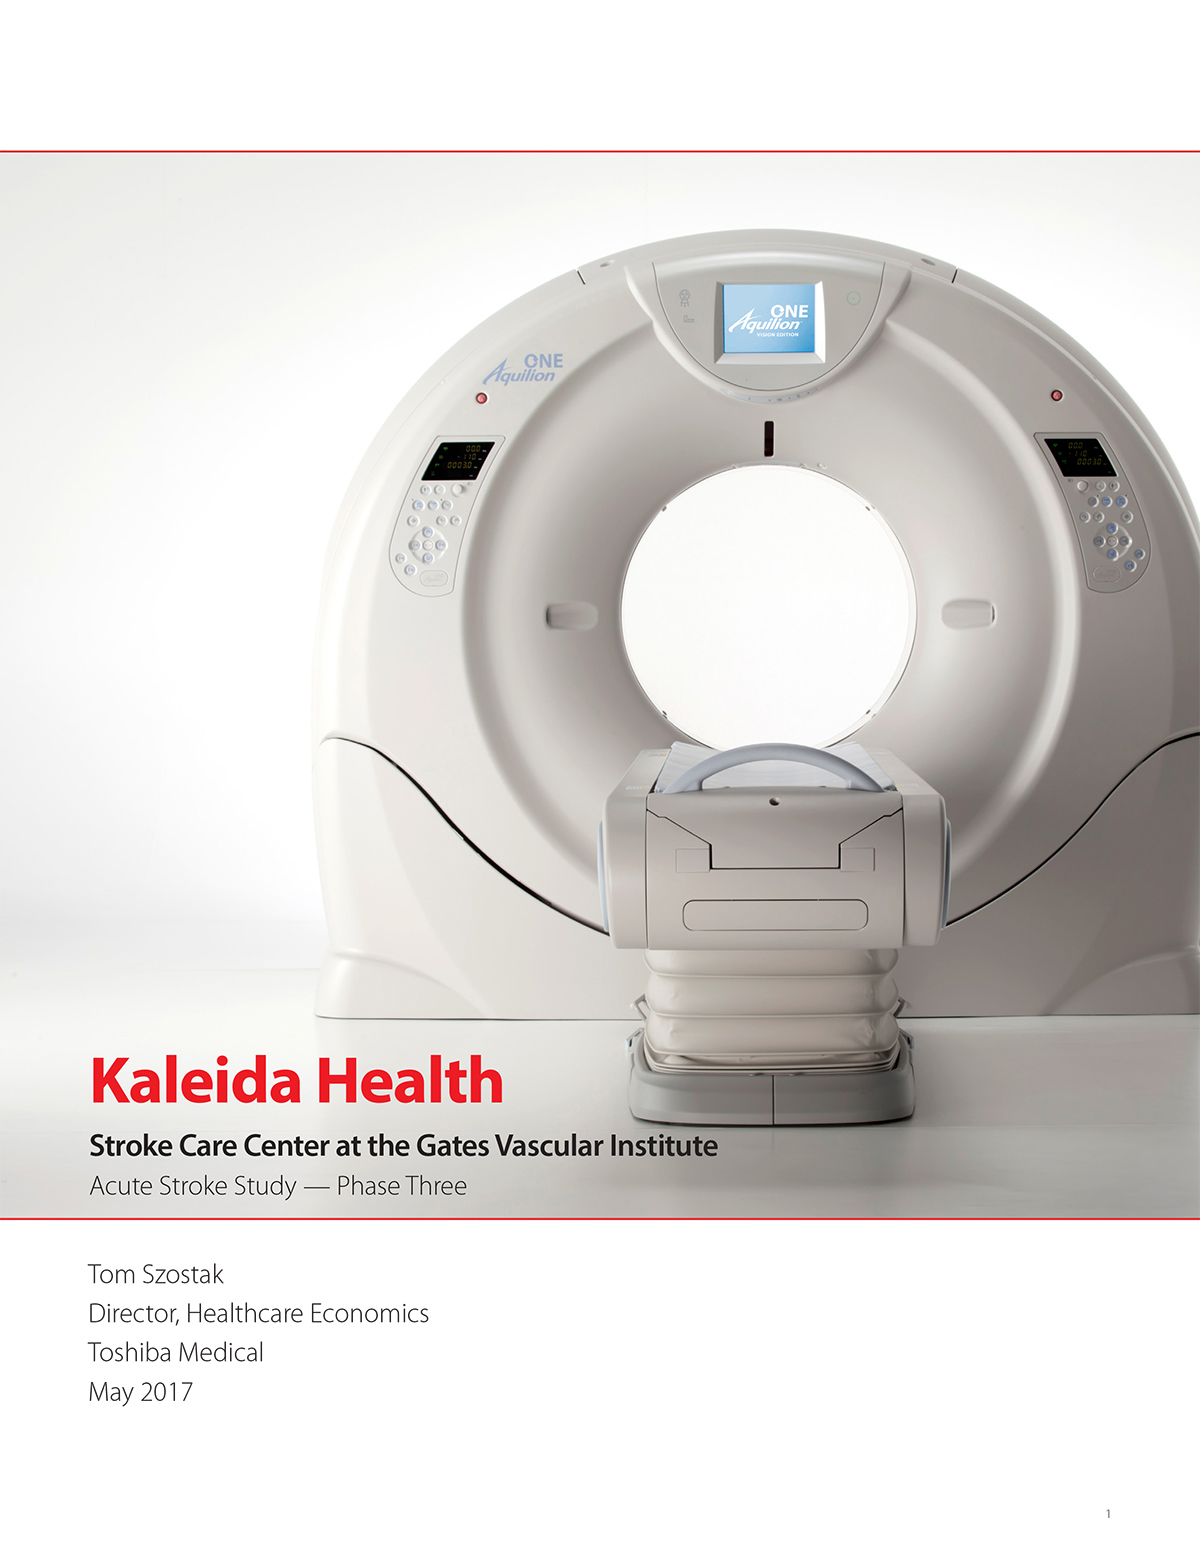 Kaleida Health Acute Stroke Study - Phase Three